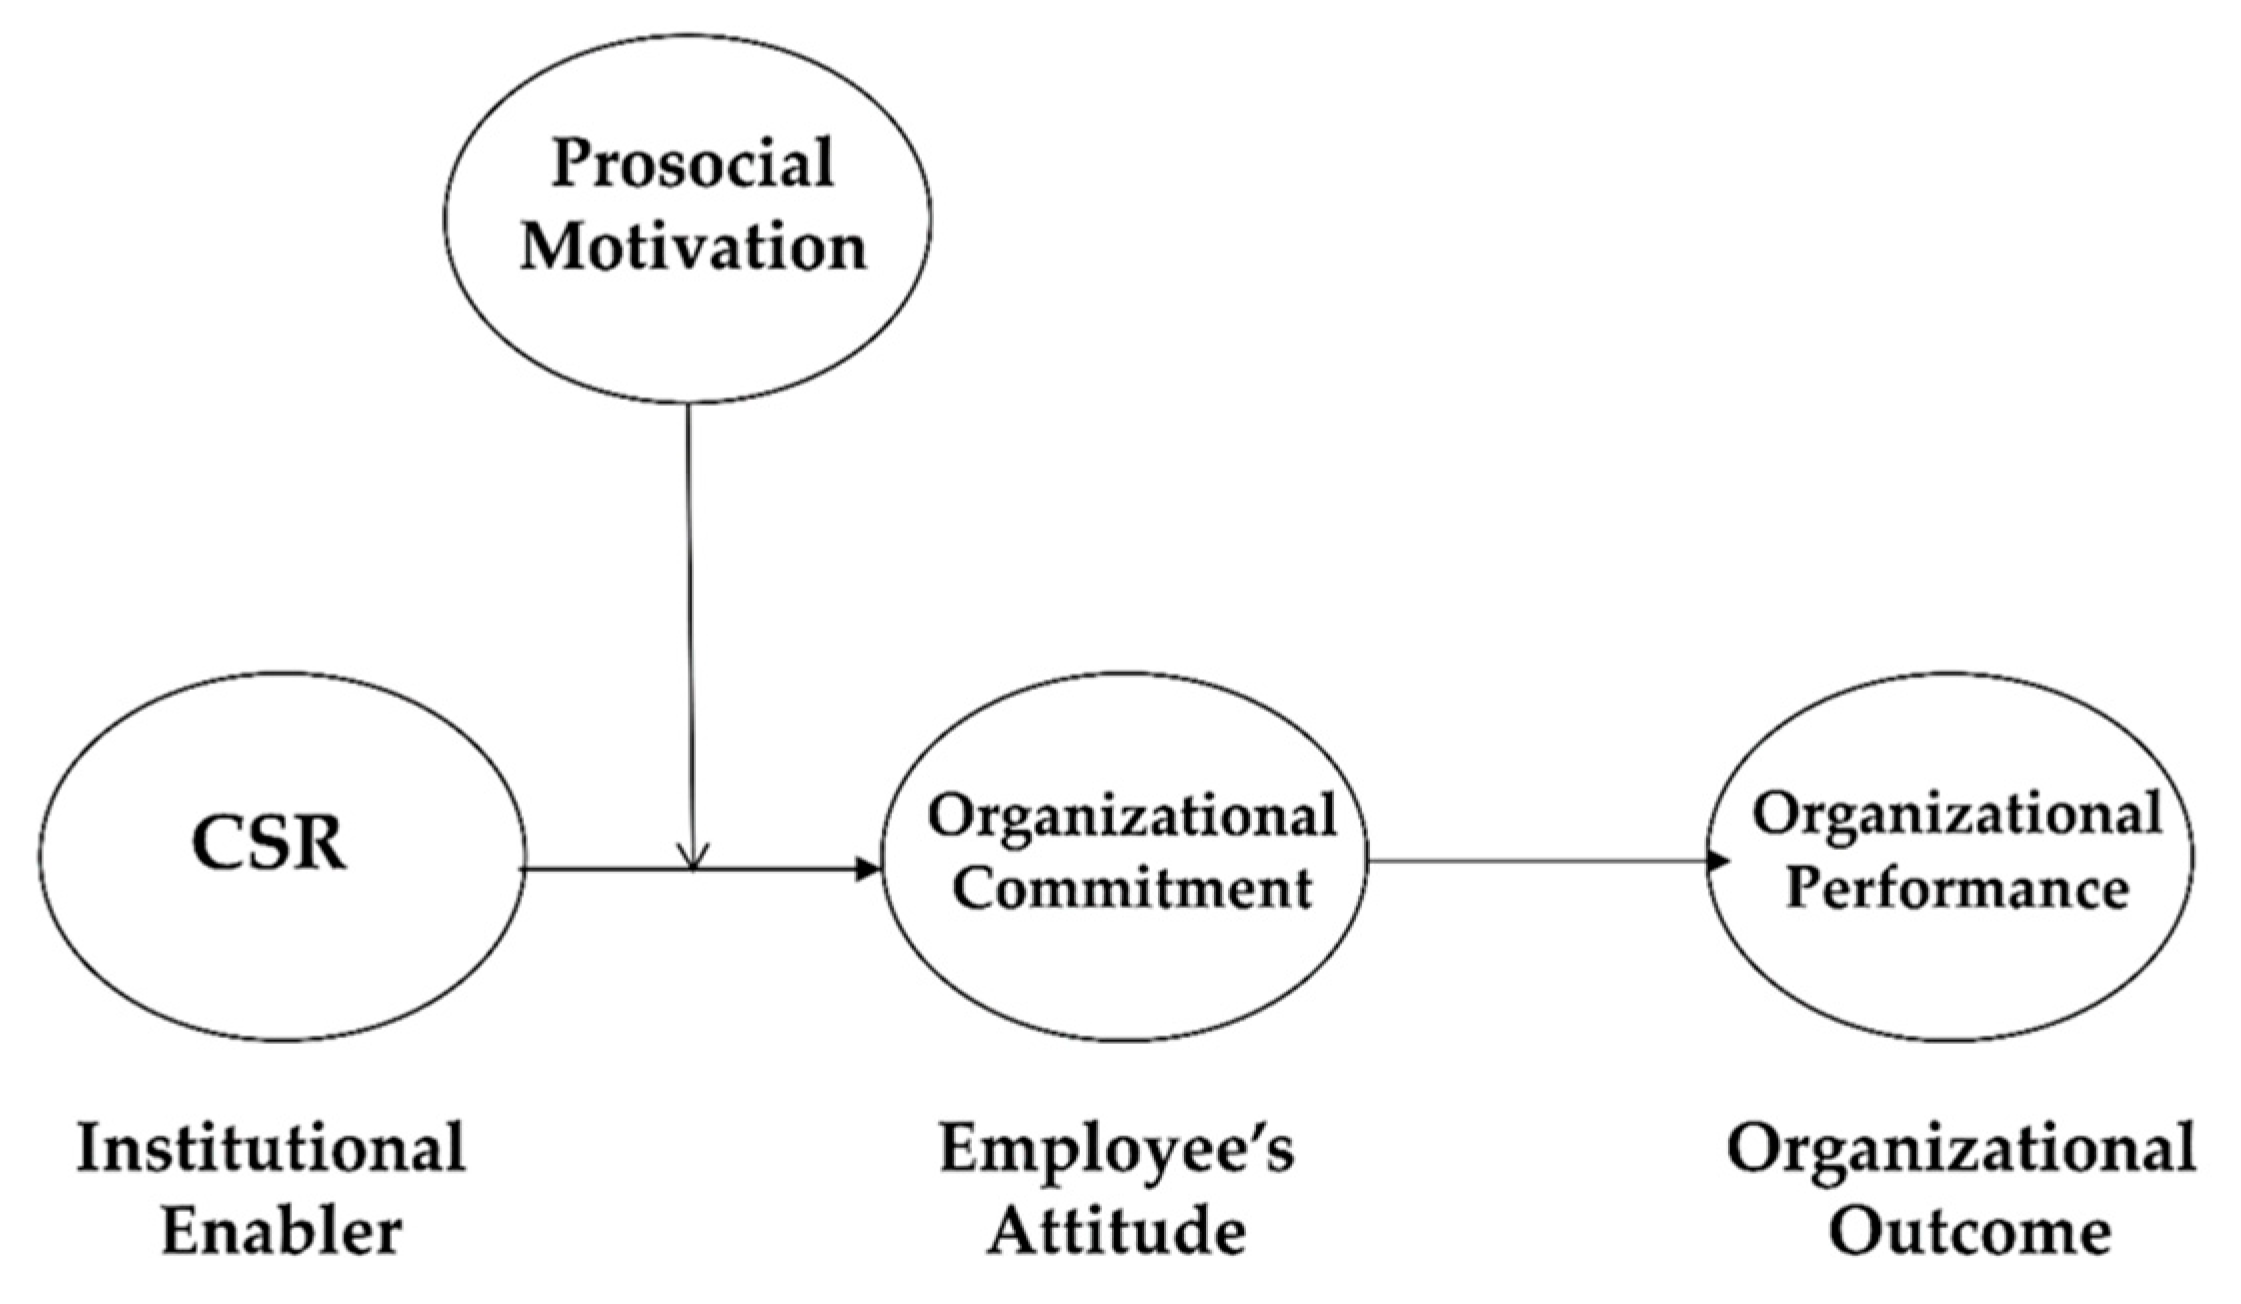 MODELING PROSOCIAL ORGANIZATIONAL BEHAVIOR IN KNOWLEDGE MANAGEMENT